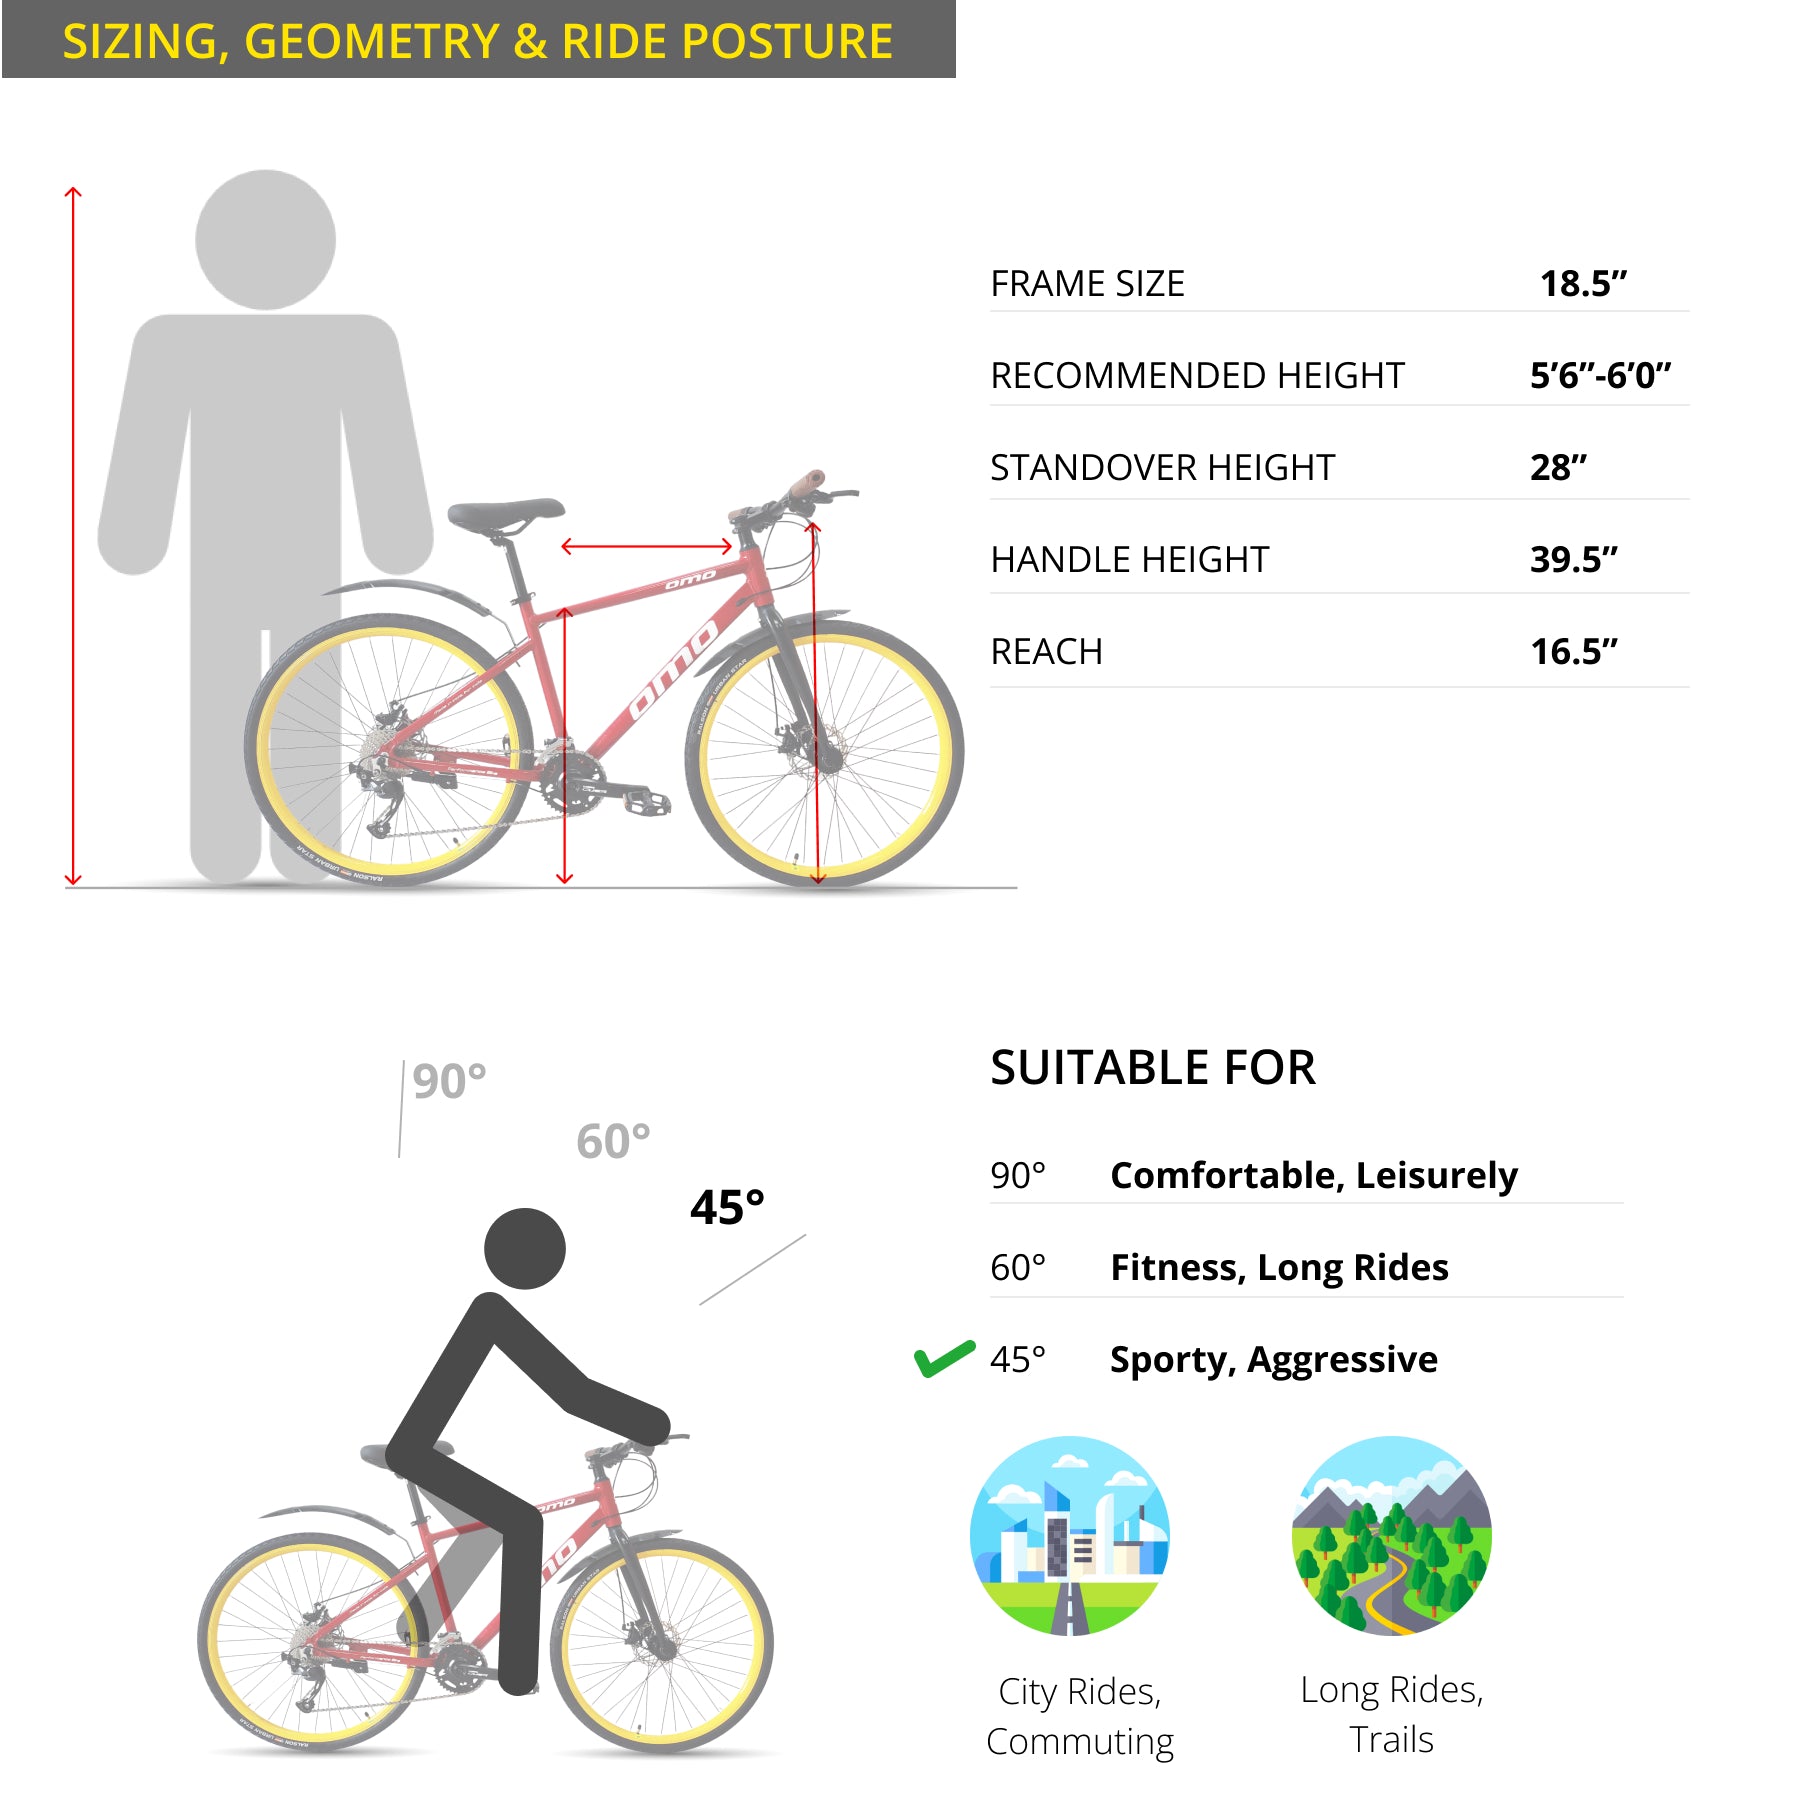 Bicycle size chart hampi ace